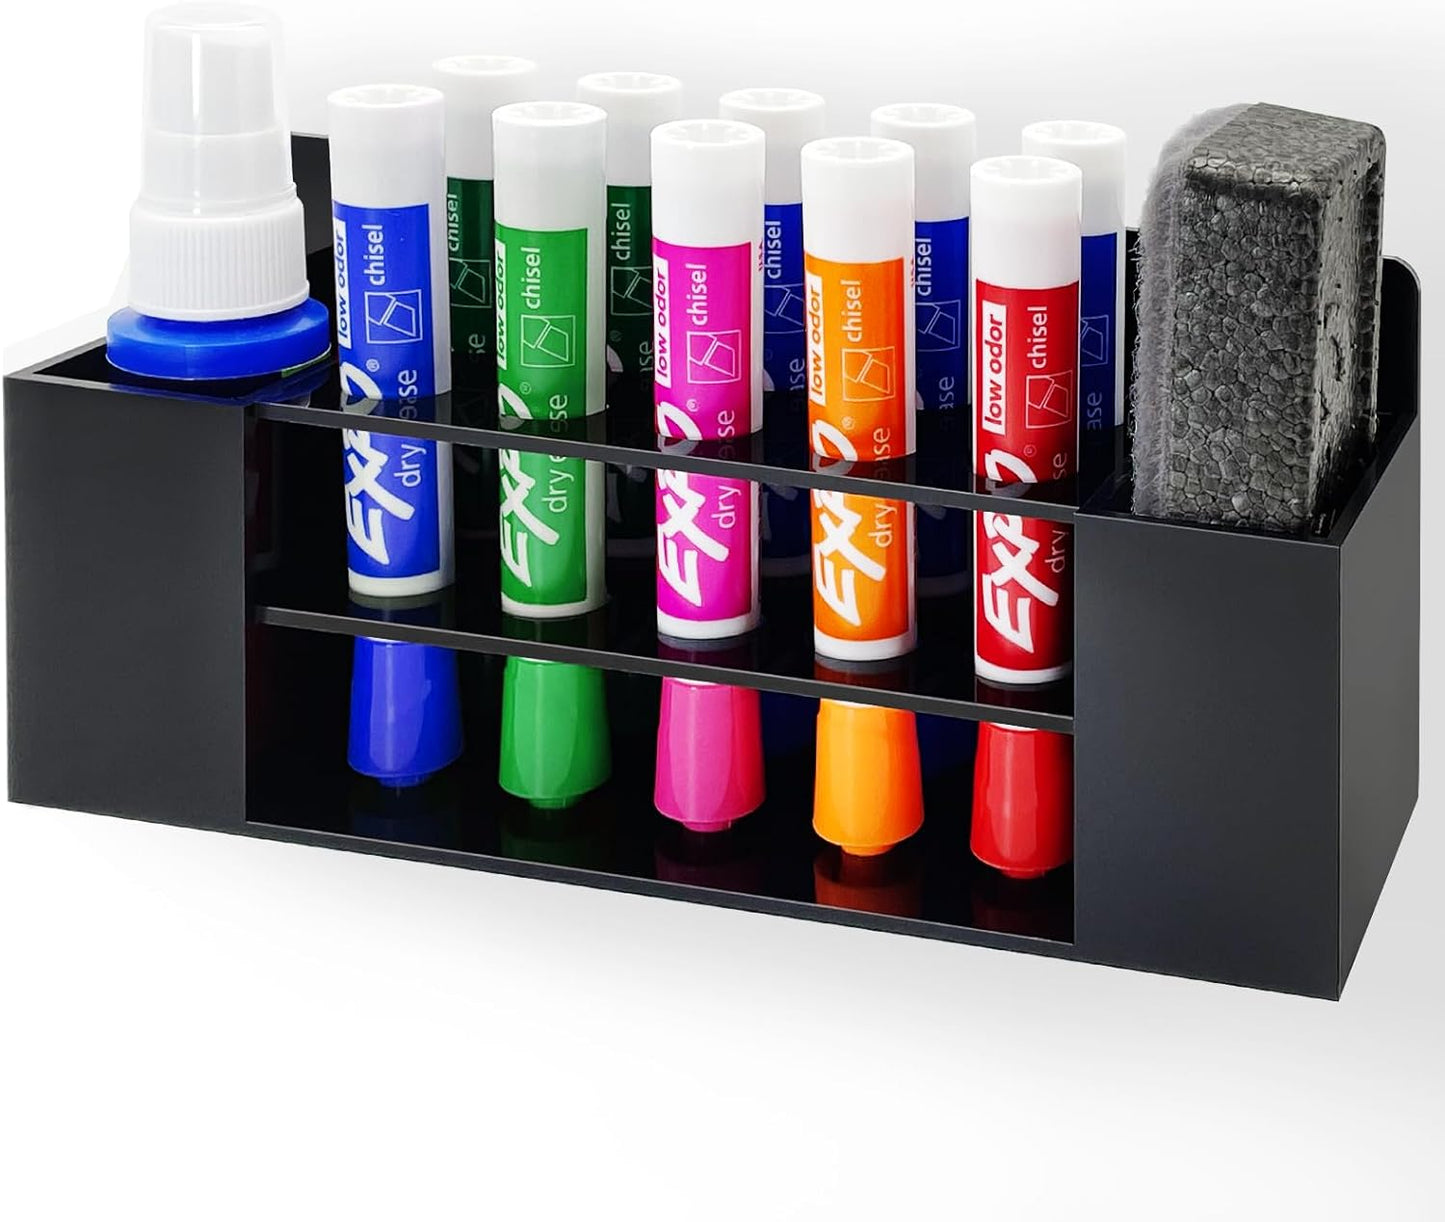 Acrylic Magnetic Dry Erase Marker Holder, 10 Slots Clear Magnetic Marker Holder, Whiteboard Marker Holder, Magnetic Pen Holder for Office, School, Home, Marker,Eraser,Cleaner Not Included